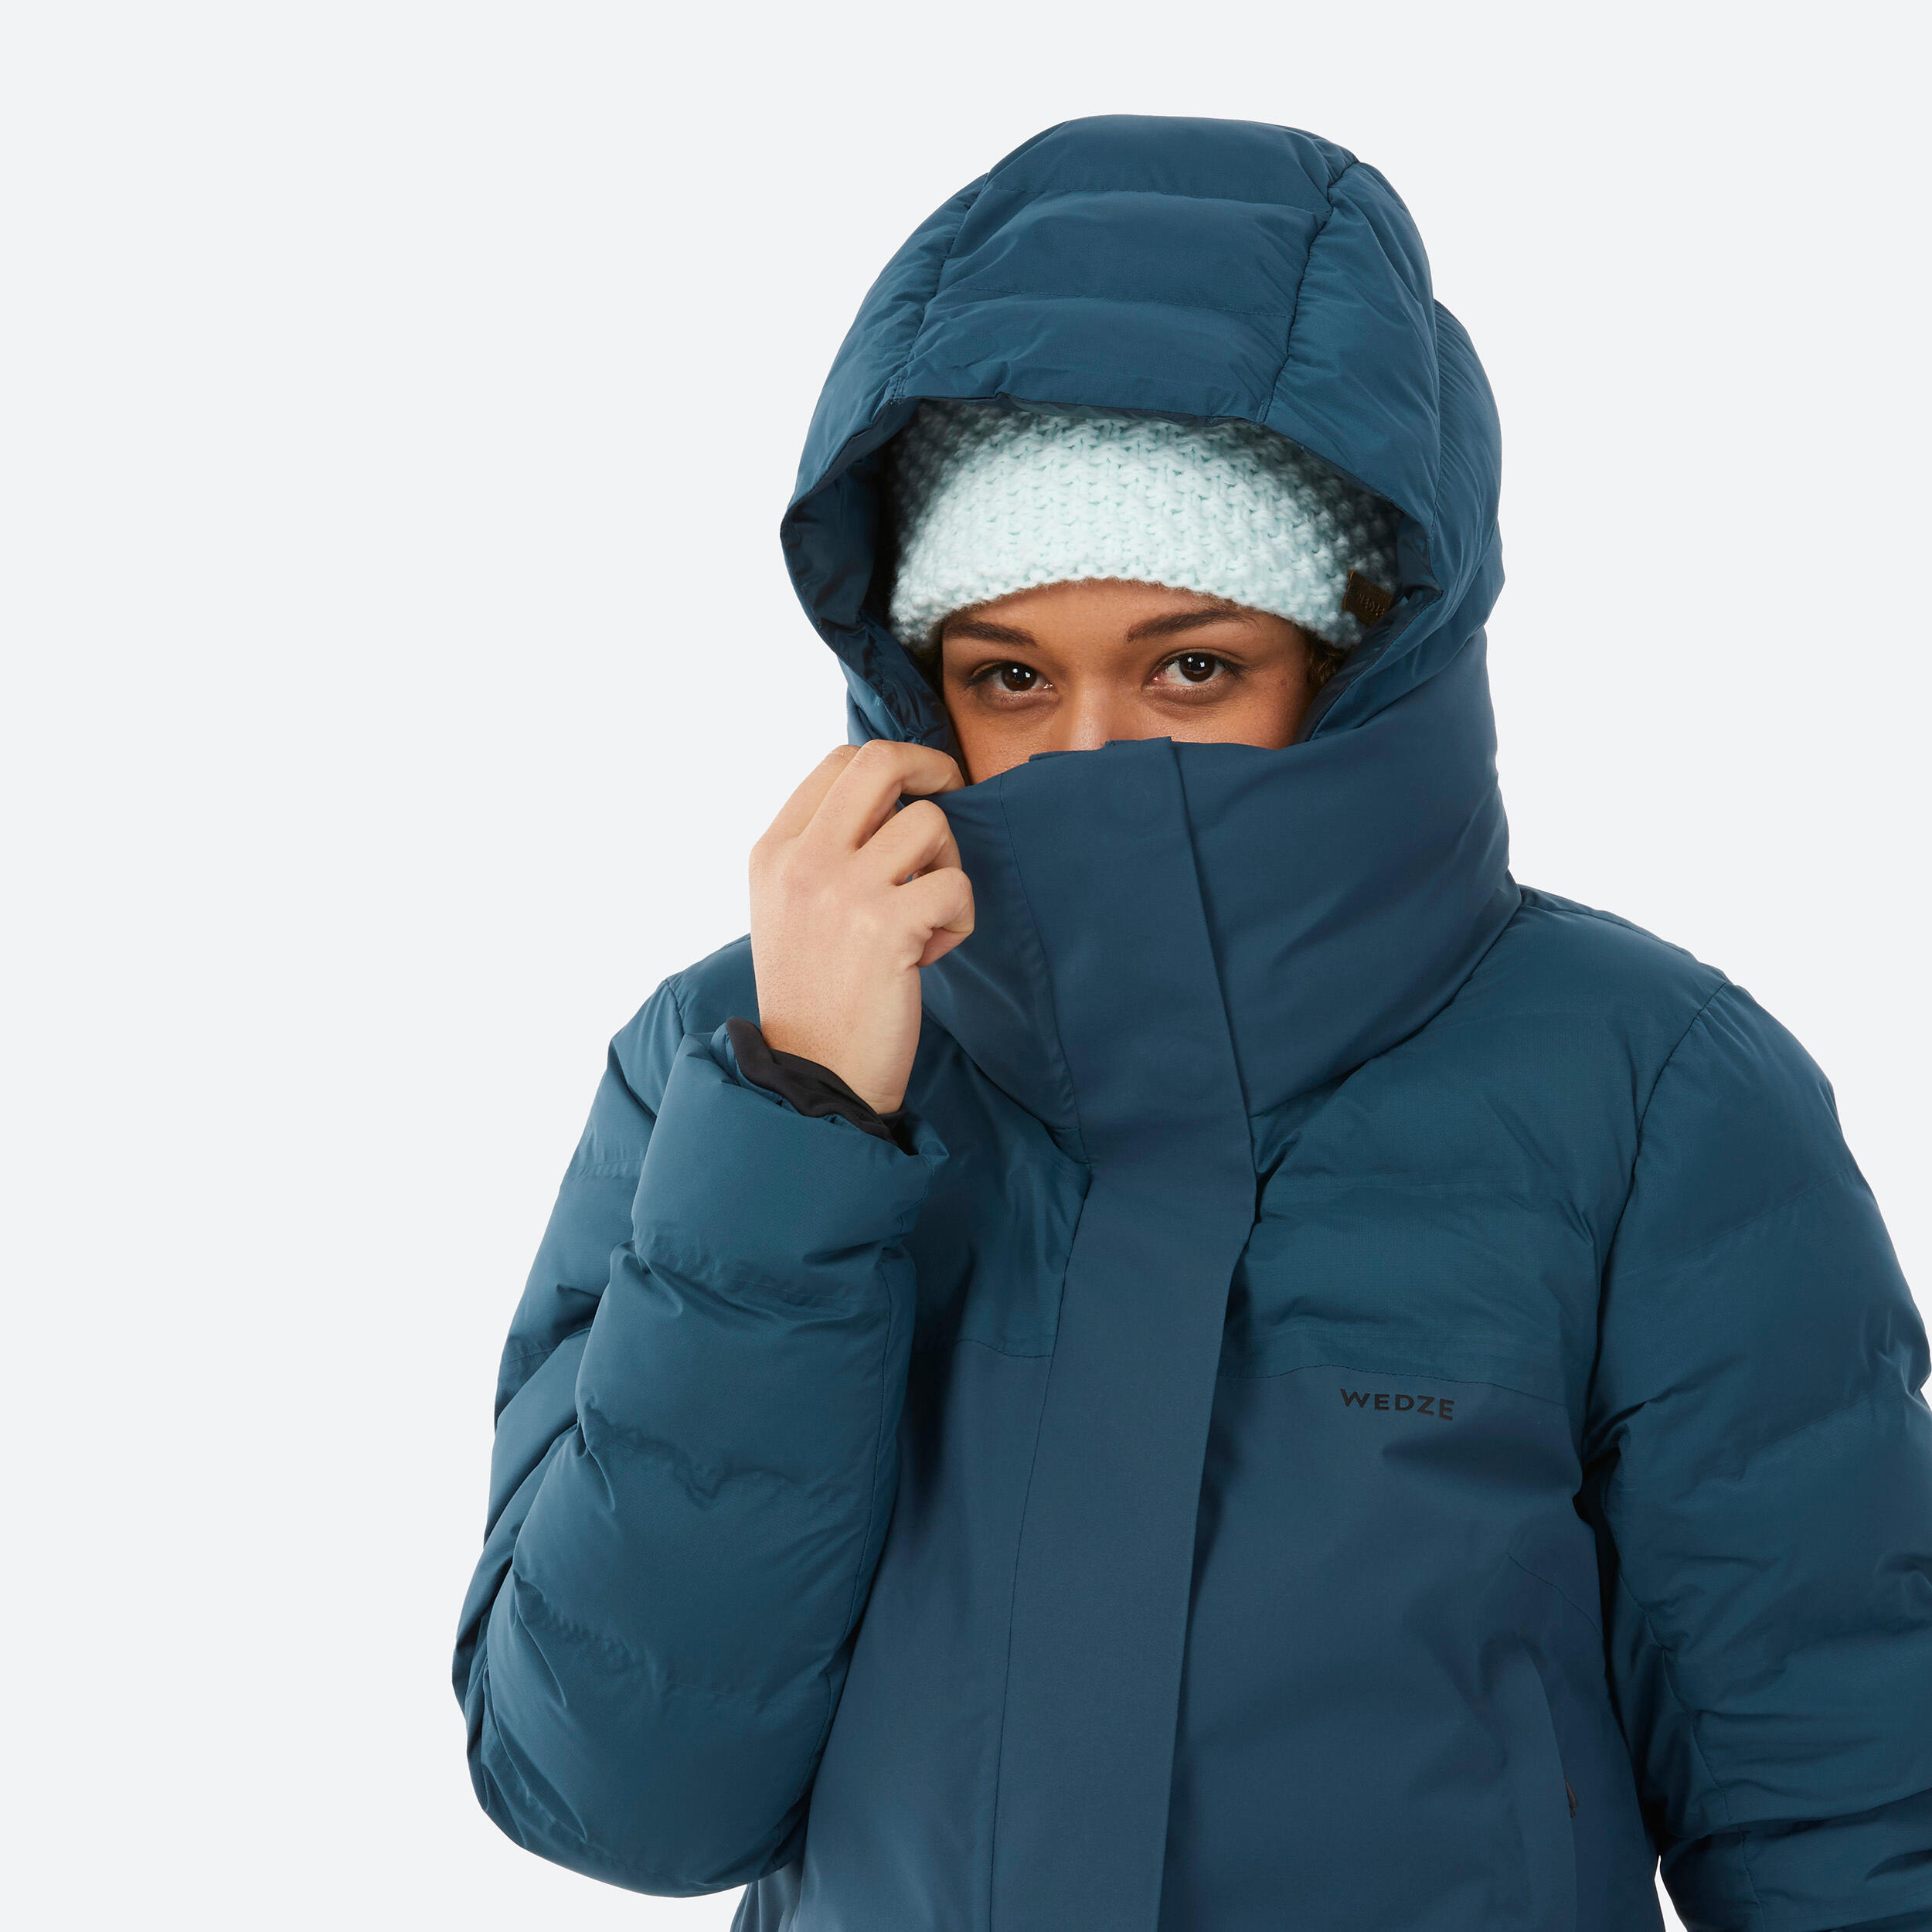 Women's Warm Mid-length Ski Jacket 500 - Blue 16/16